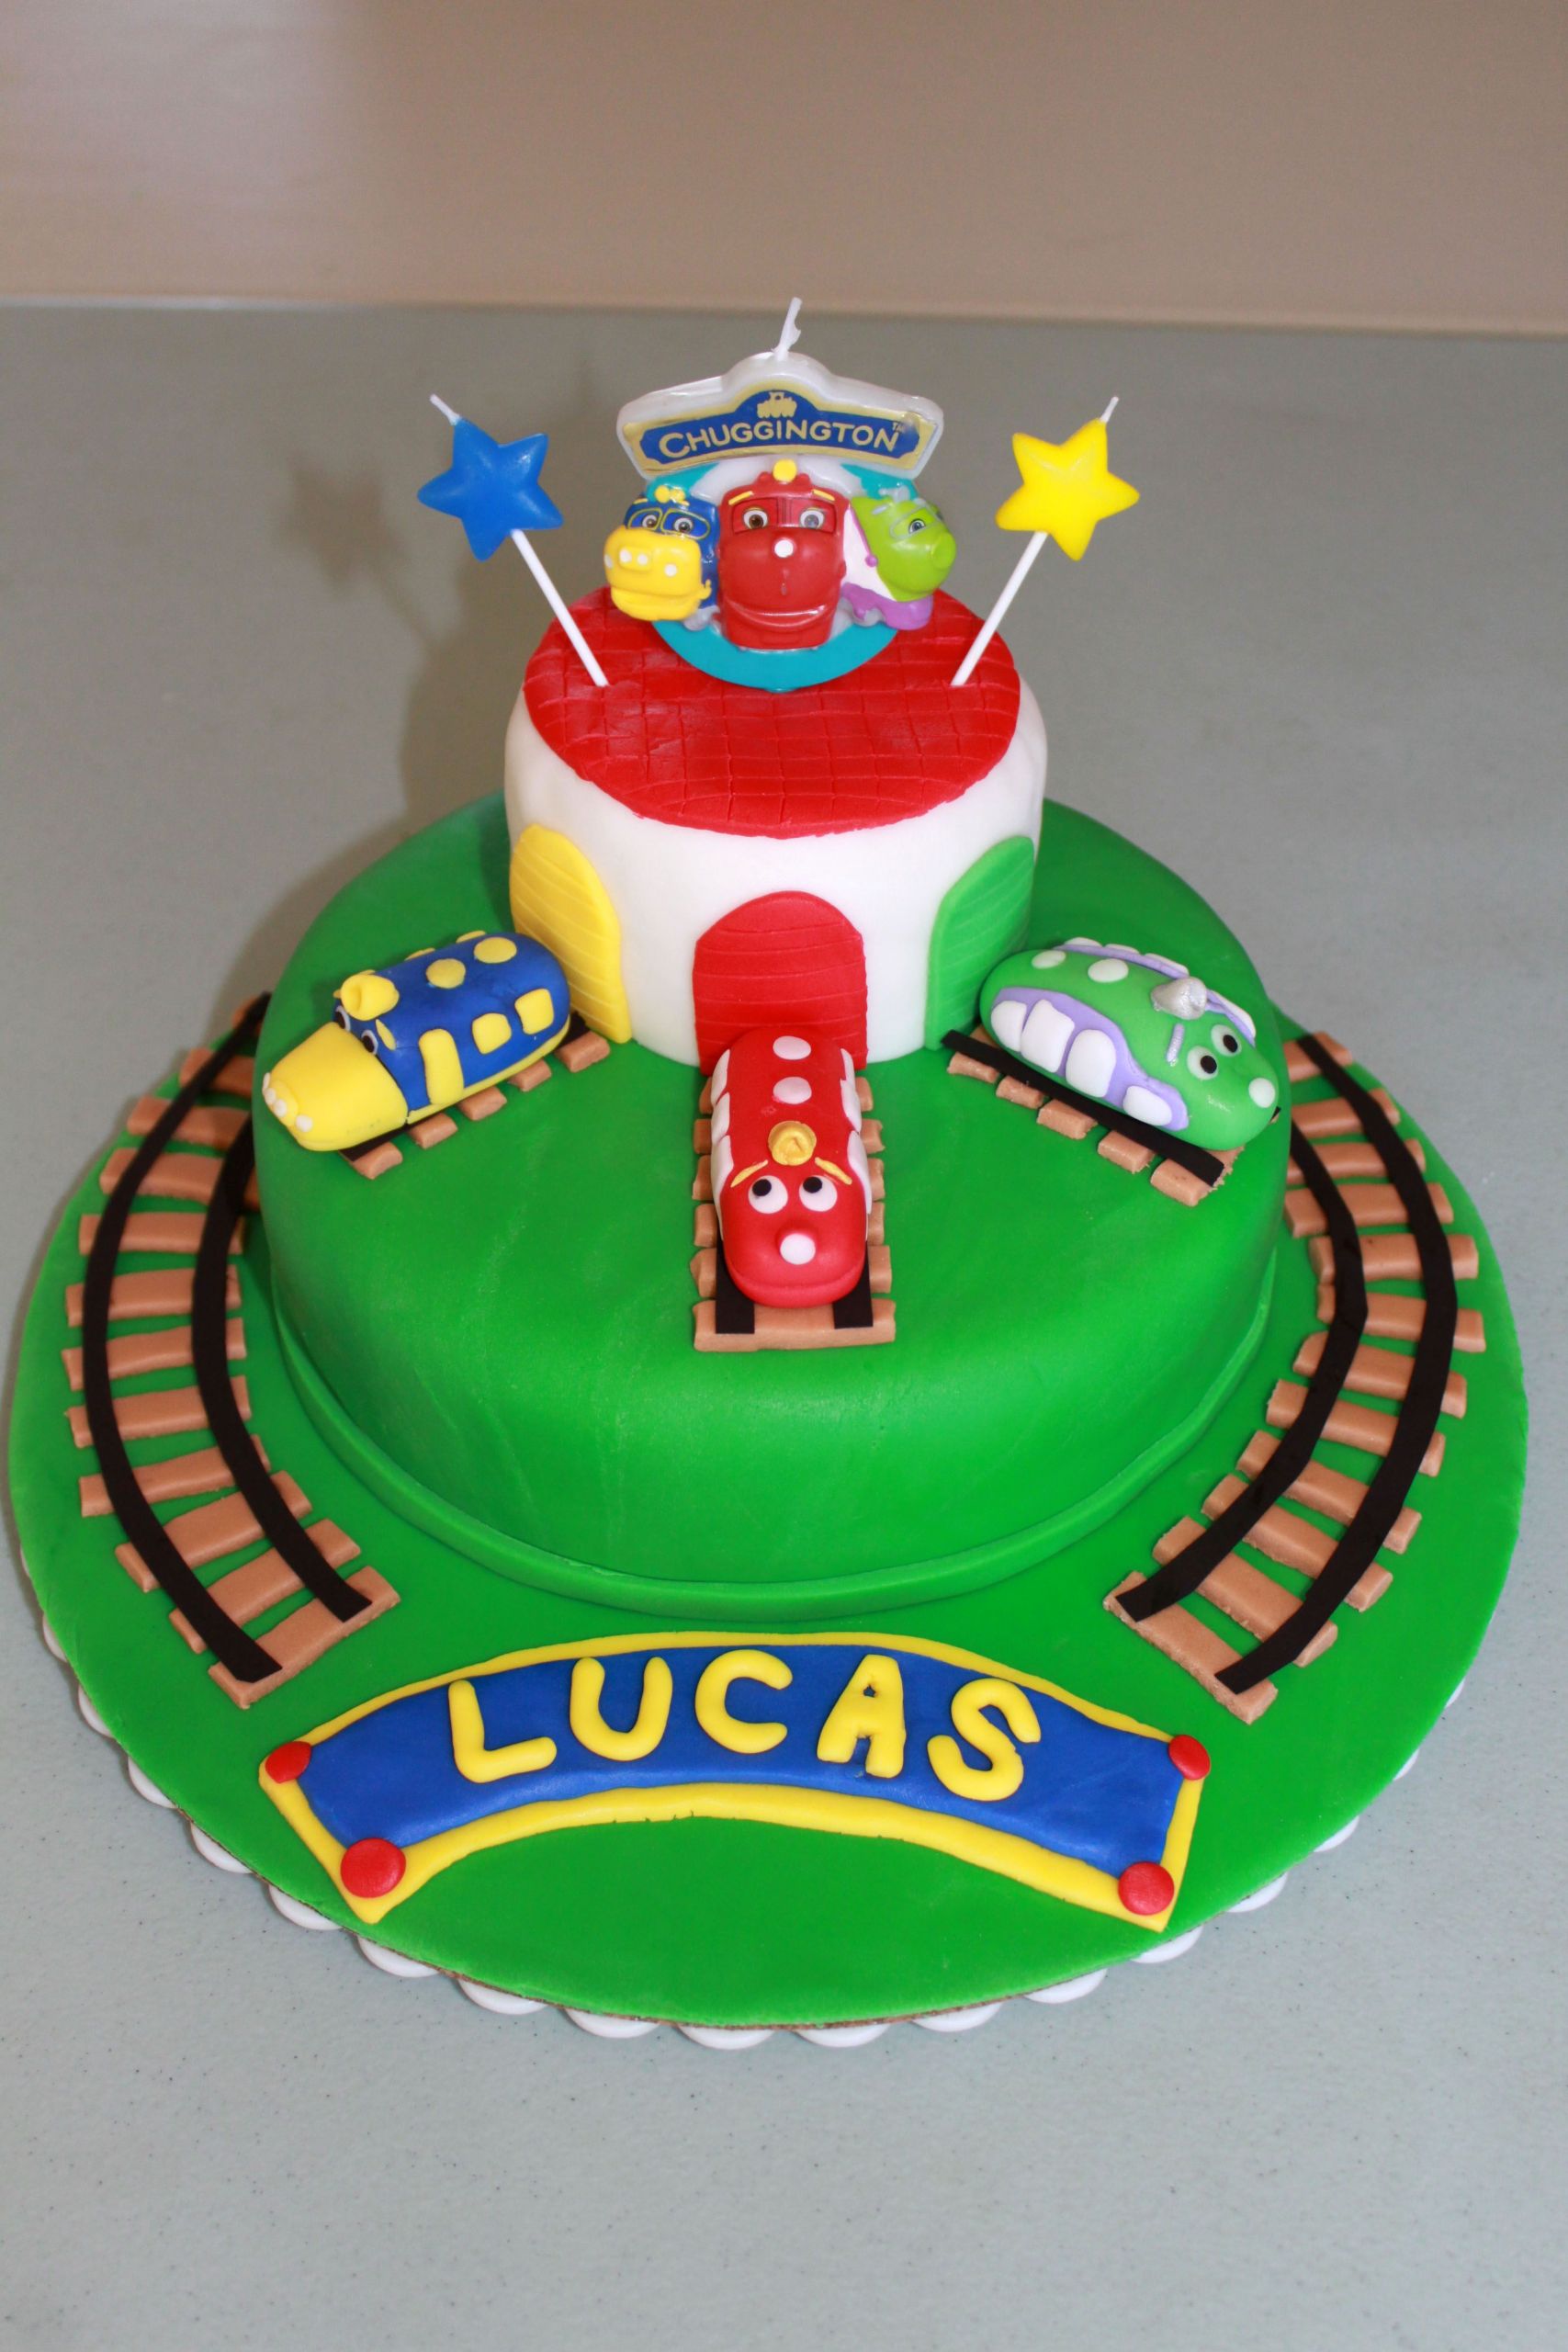 Chuggington Birthday Cake
 Lucas Chuggington Cake